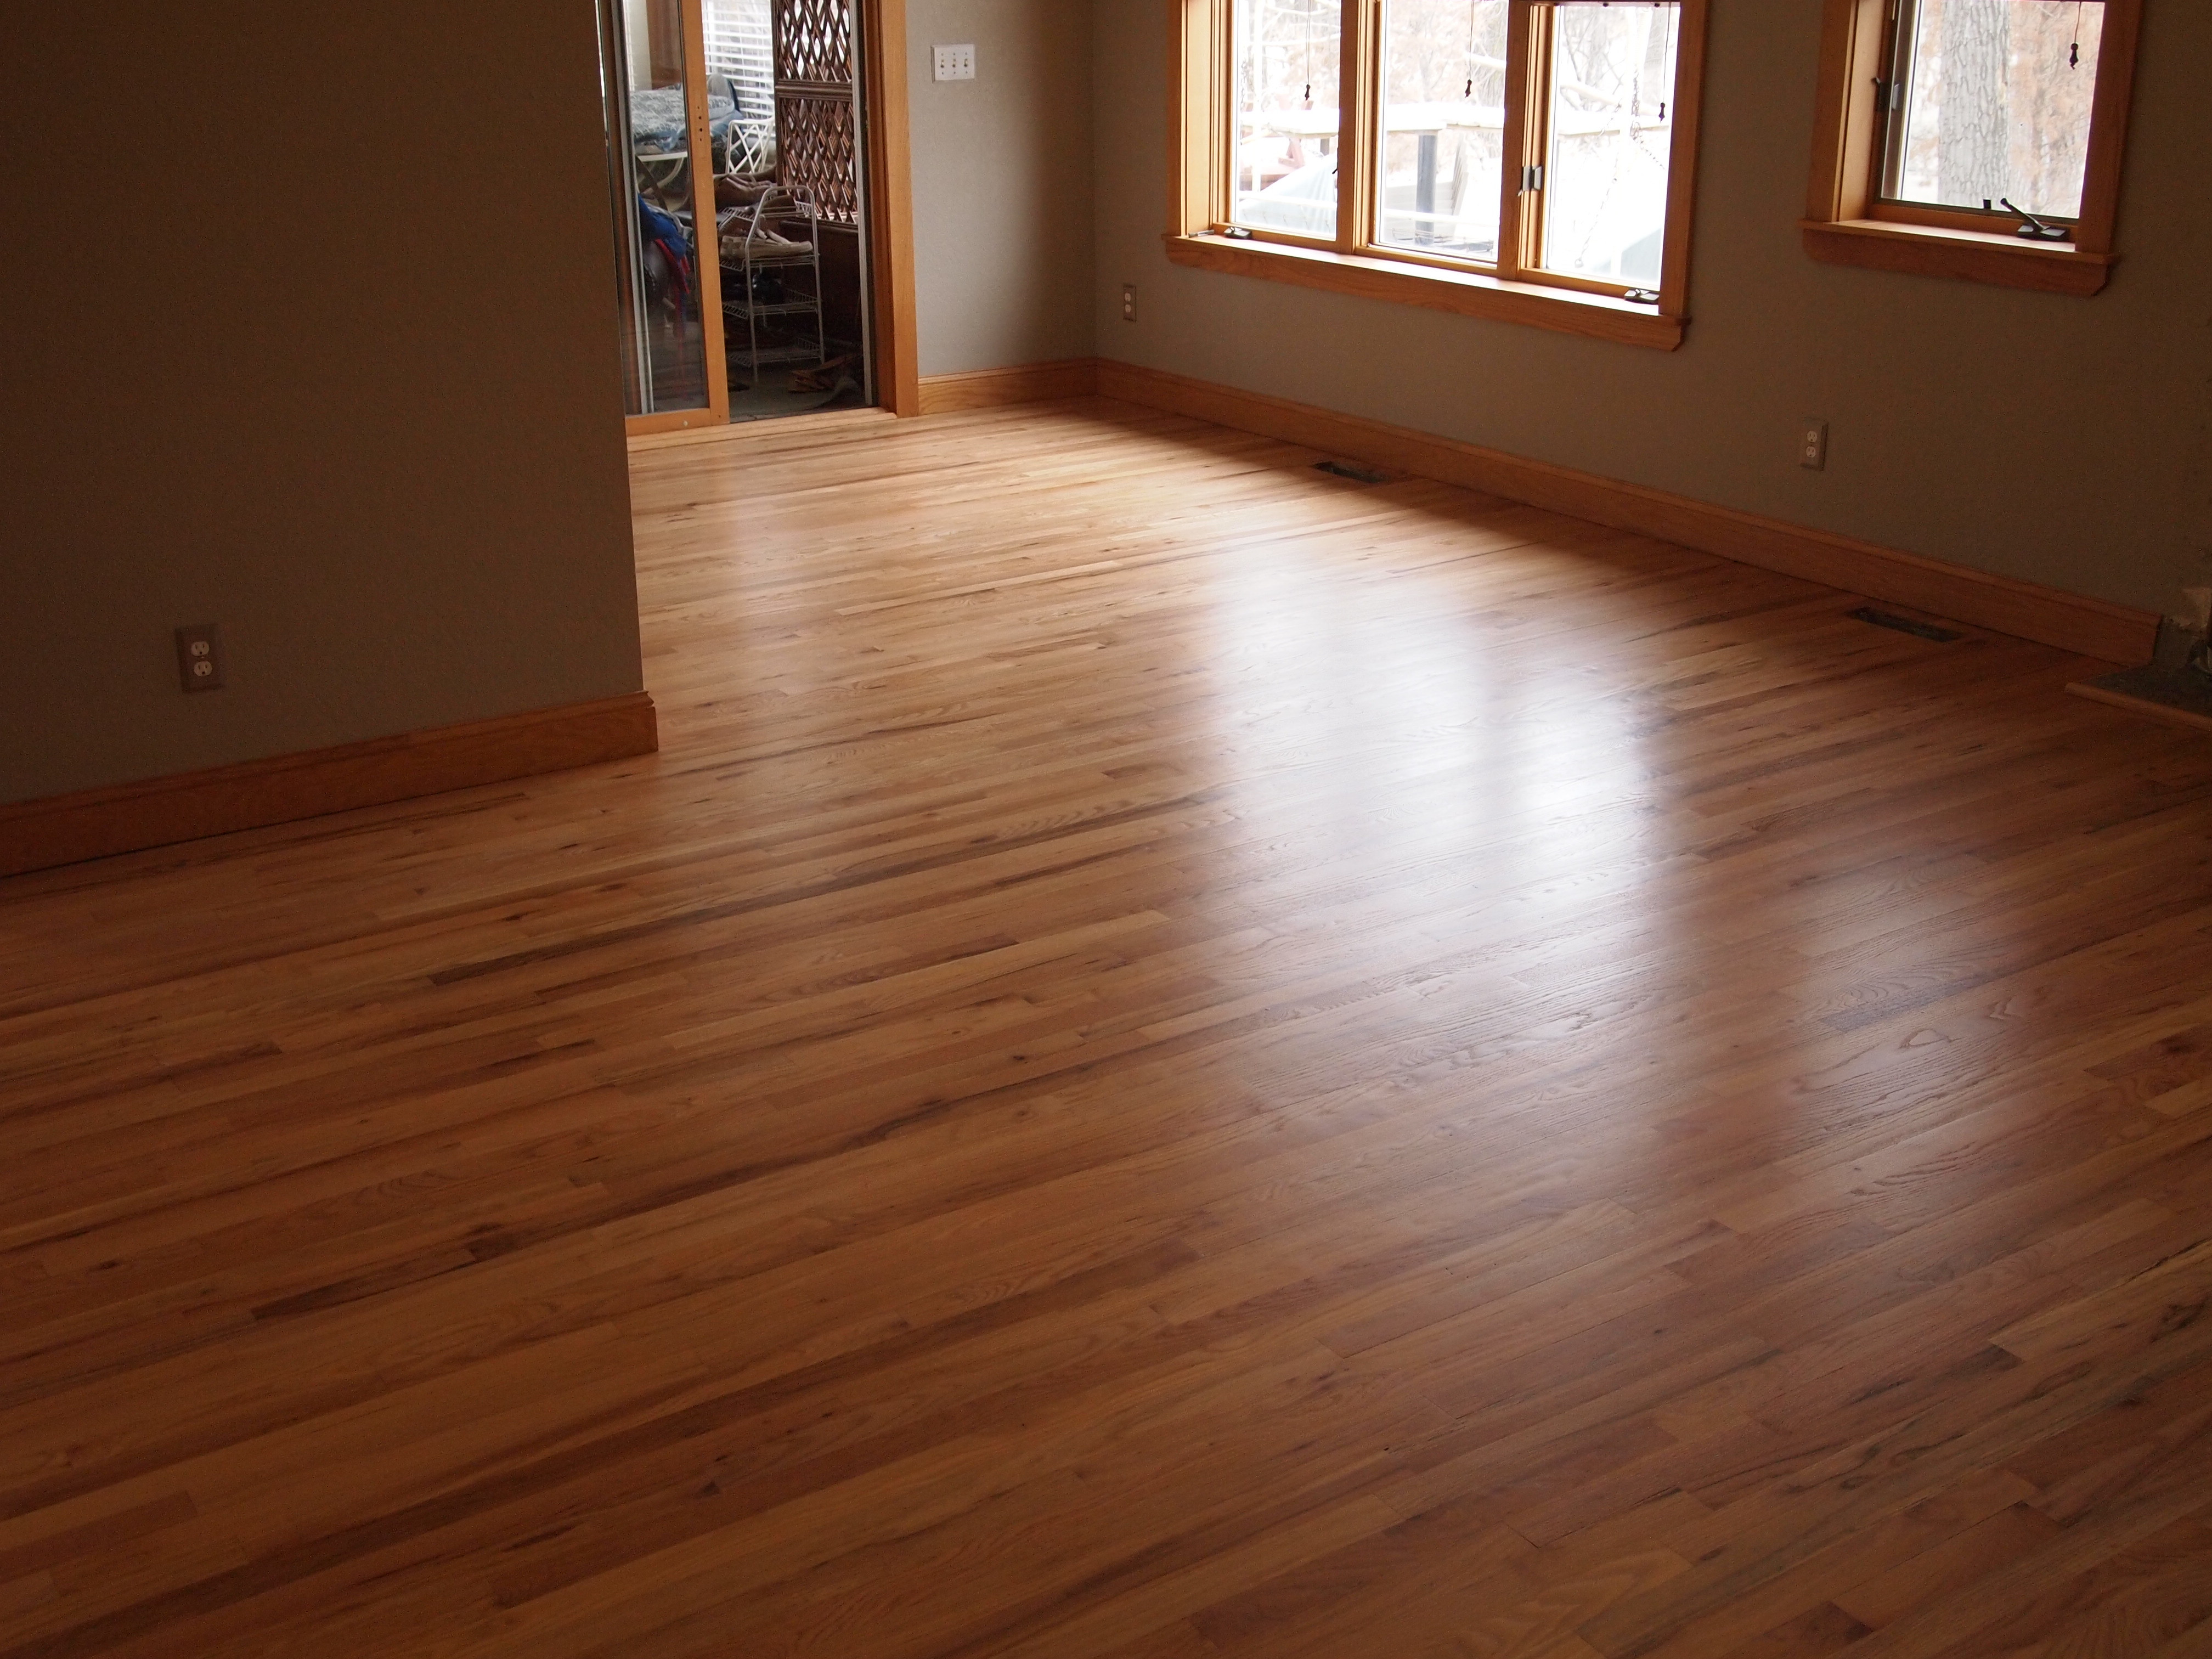 cheap red oak hardwood flooring of natural accent hardwood floors is blogging natural wood floor regarding natural accent hardwood floors is blogging natural red oak wood floors